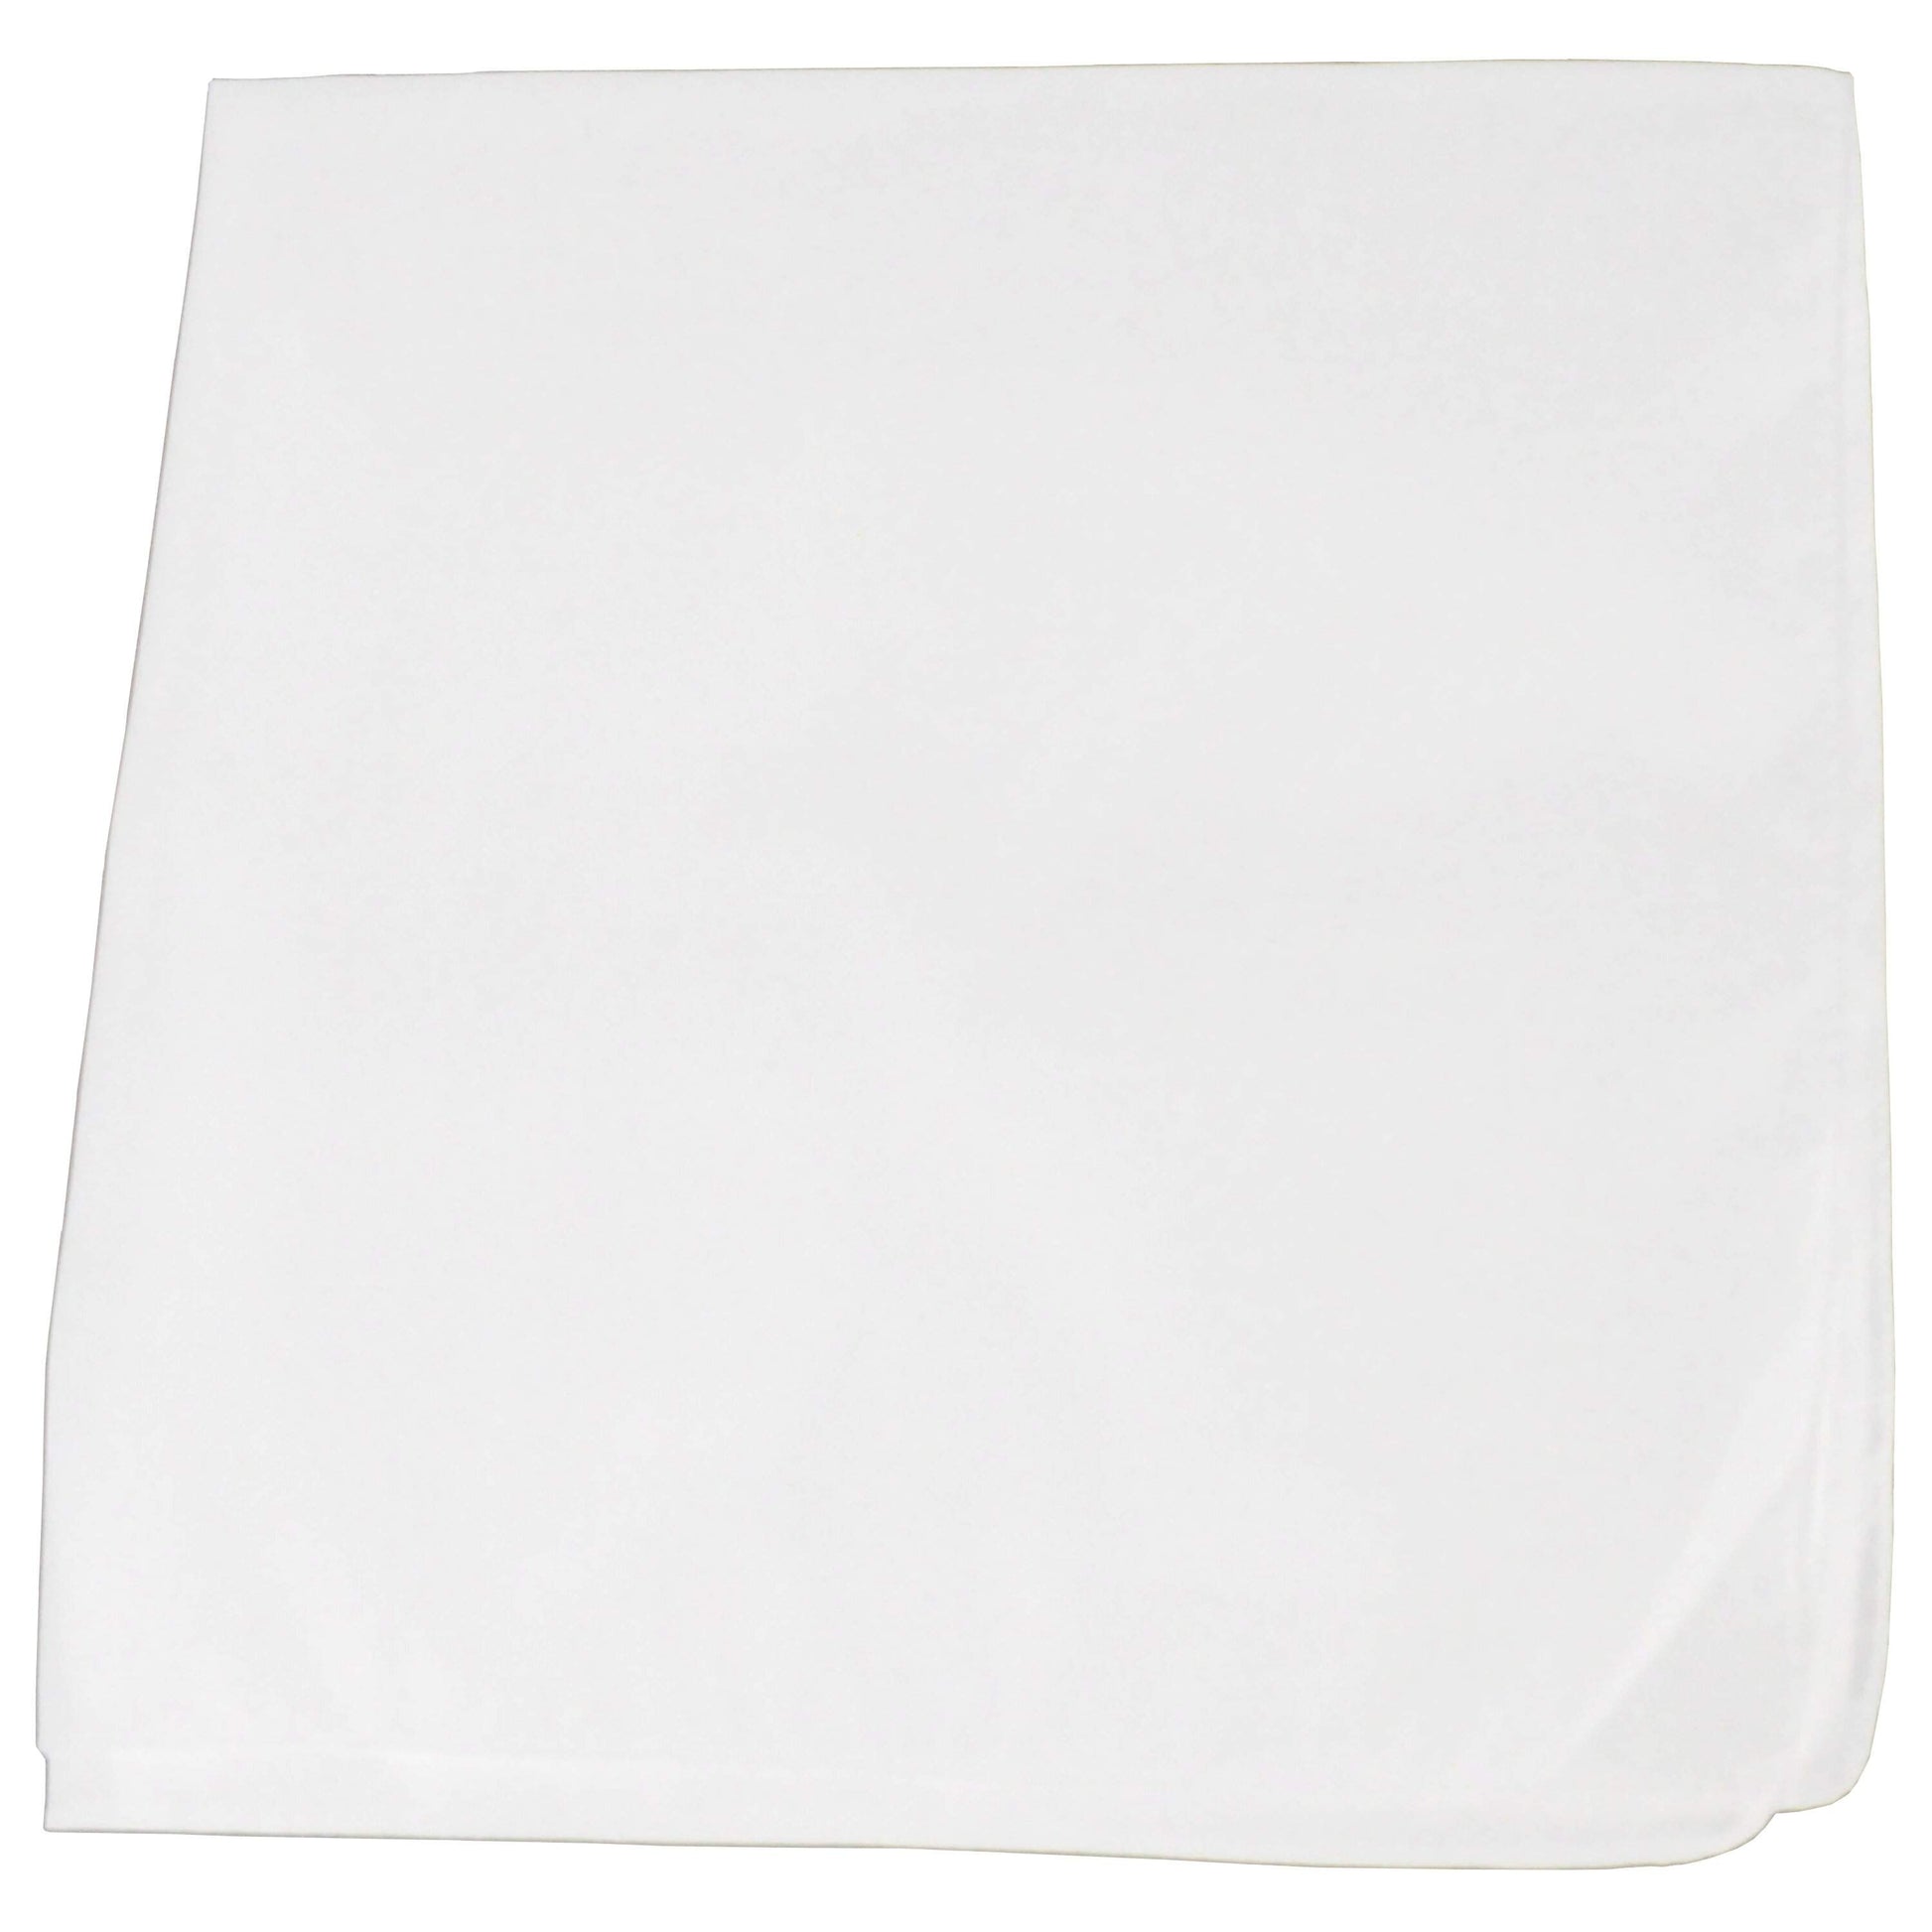 Daily Basic Bulk Lot Polyester XL Multi-Purpose Bandana - Paisley and Solid - Pack of 200 (Mix)